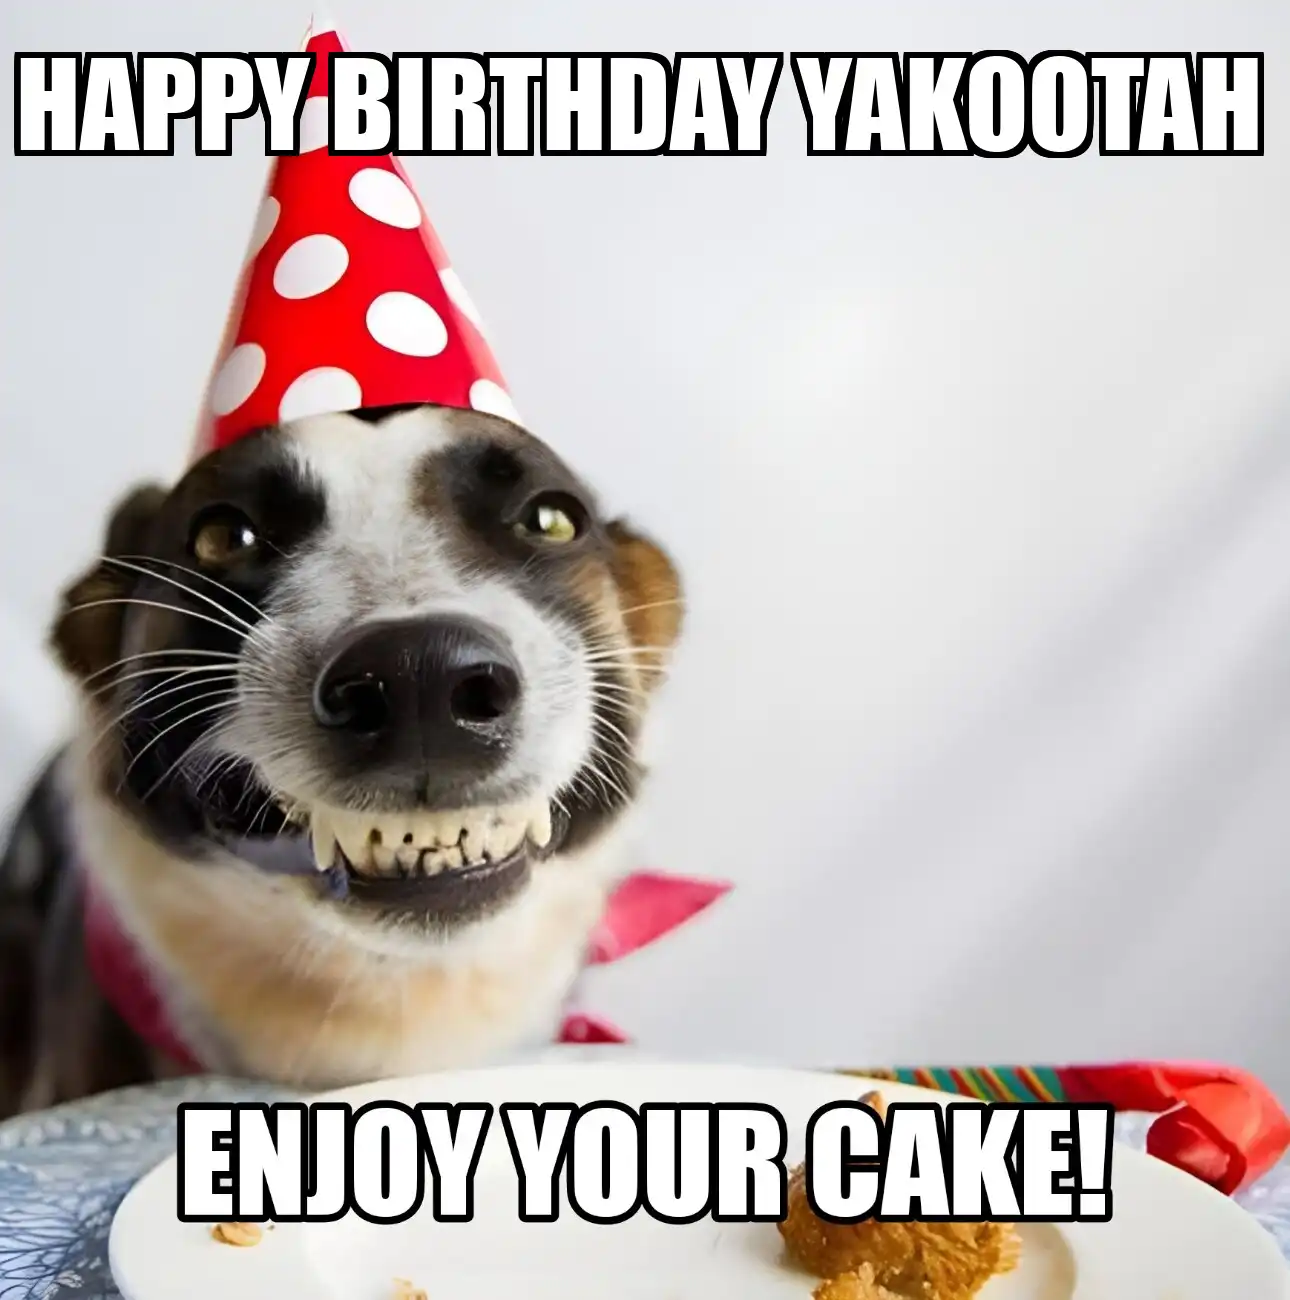 Happy Birthday Yakootah Enjoy Your Cake Dog Meme